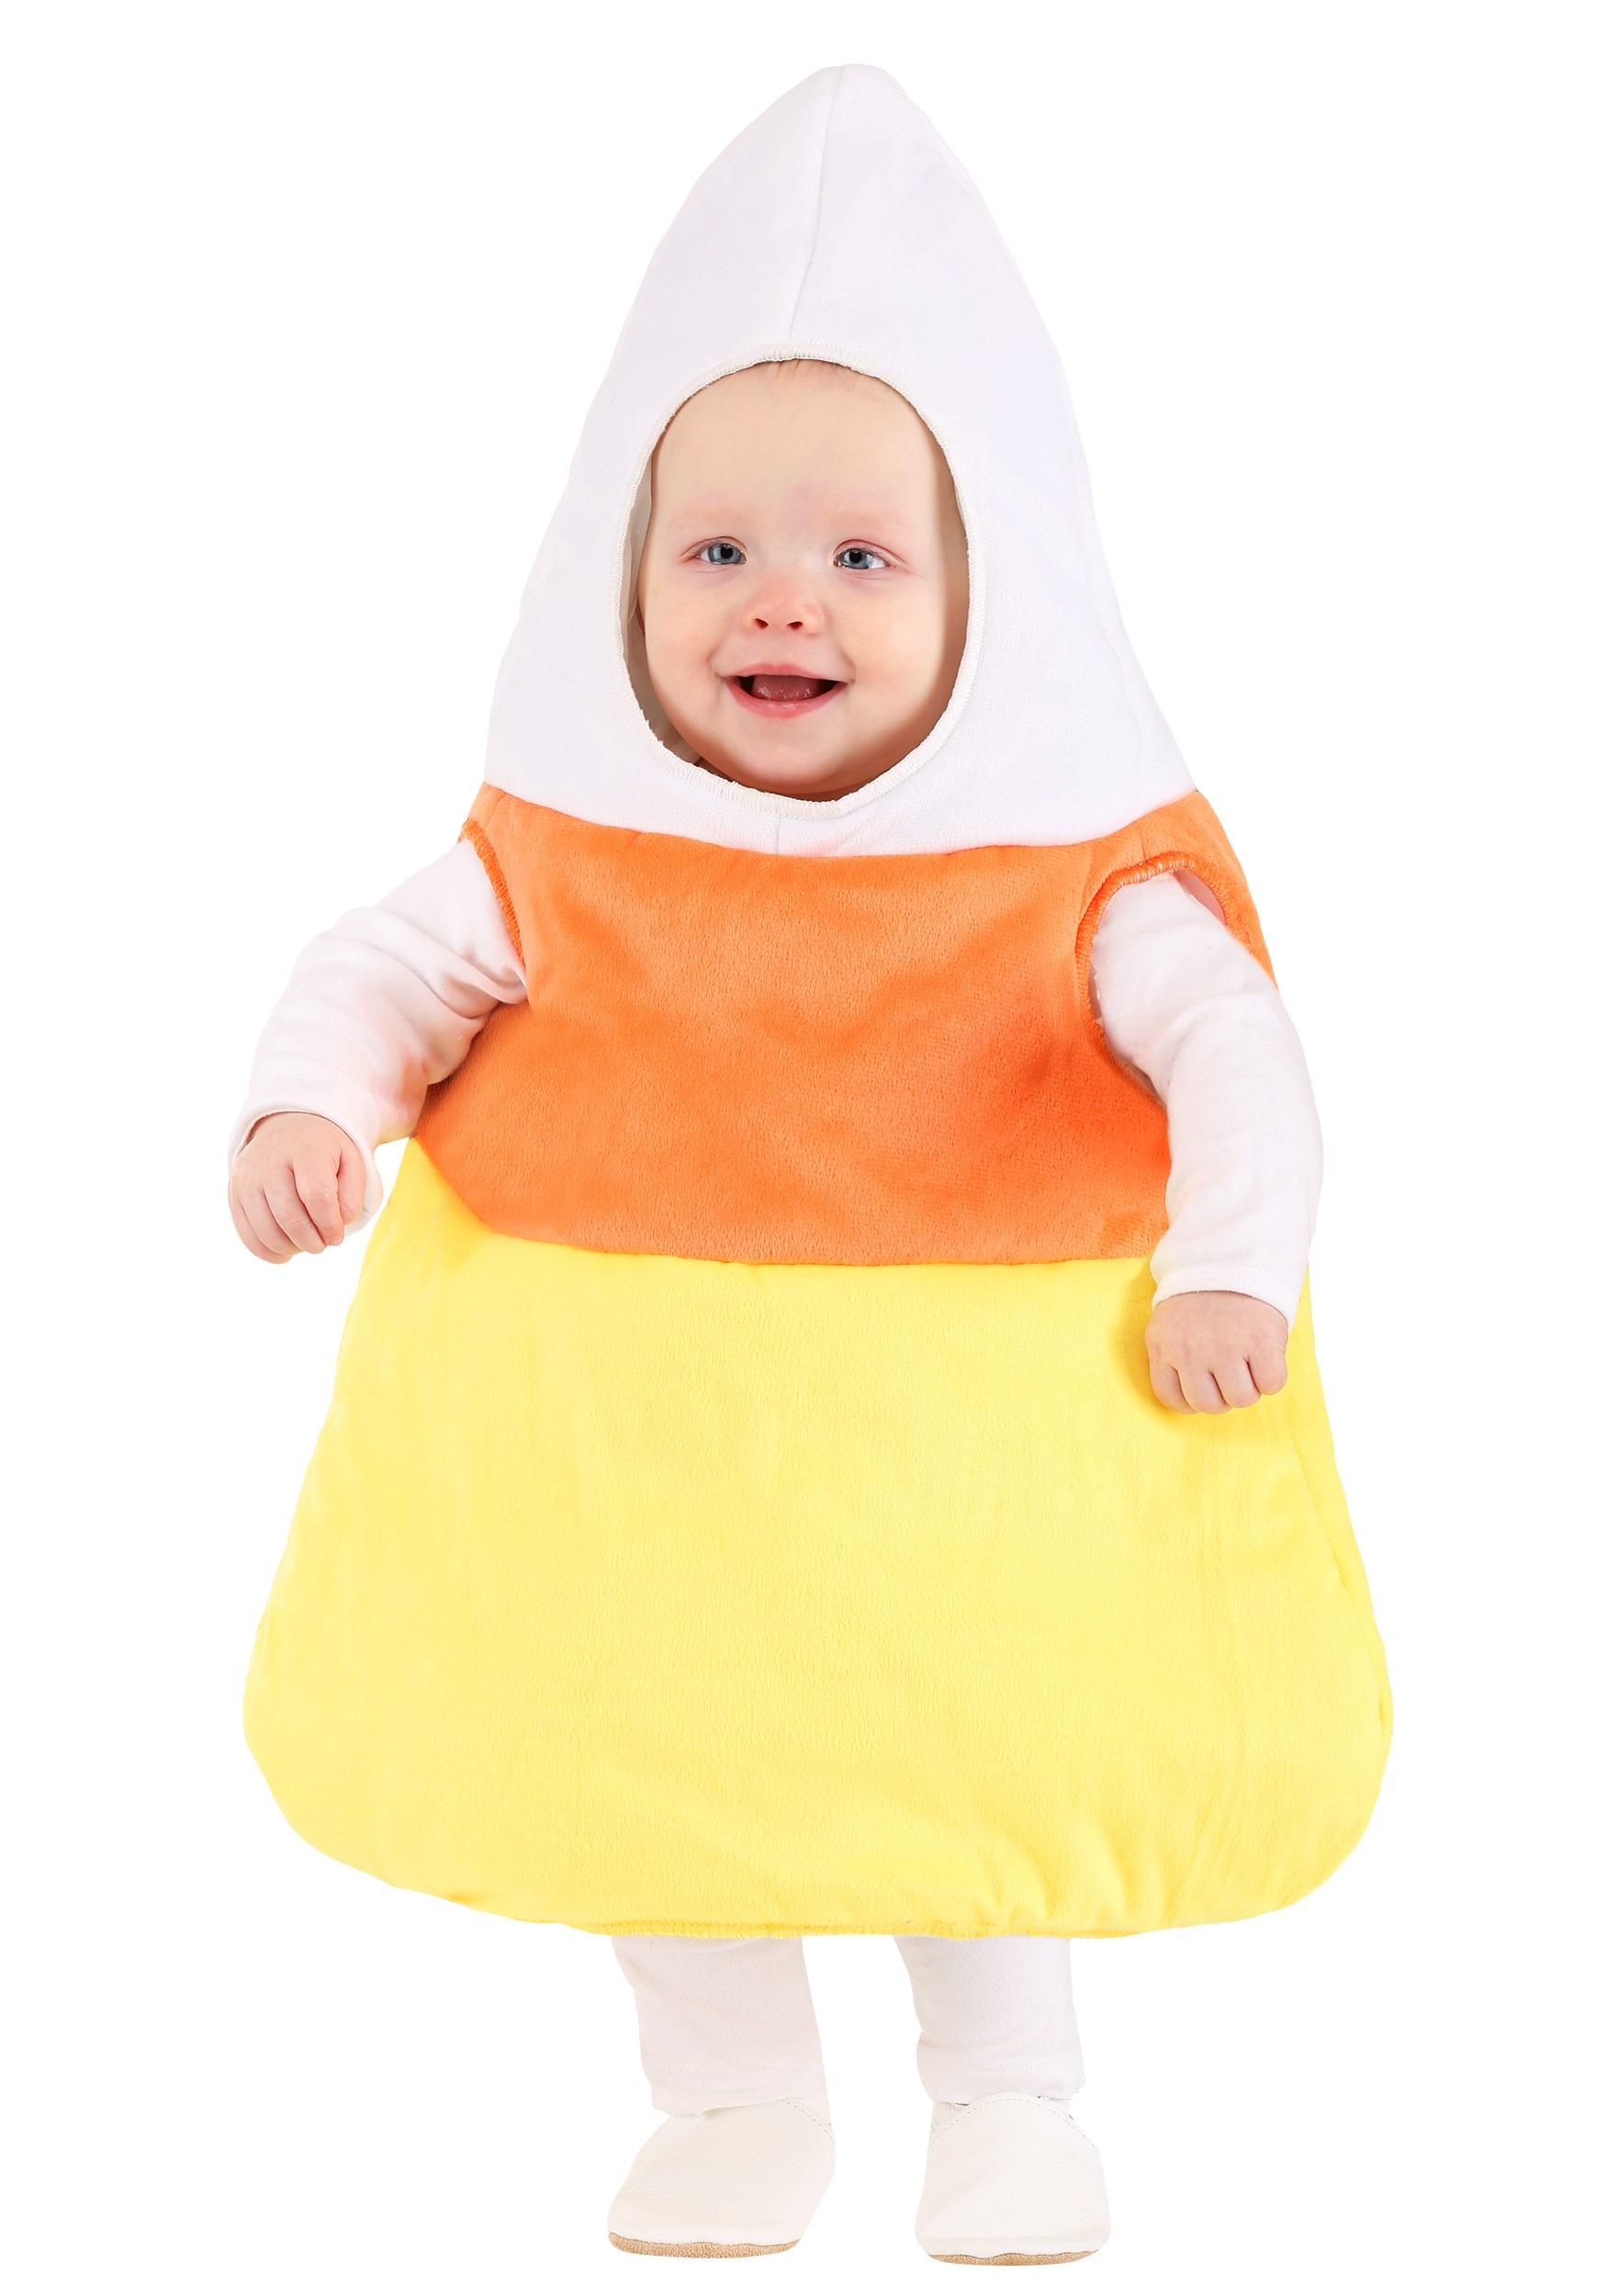 Photos - Fancy Dress Candy FUN Costumes  Corn Infant Costume Orange/White/Yellow FUN7001 